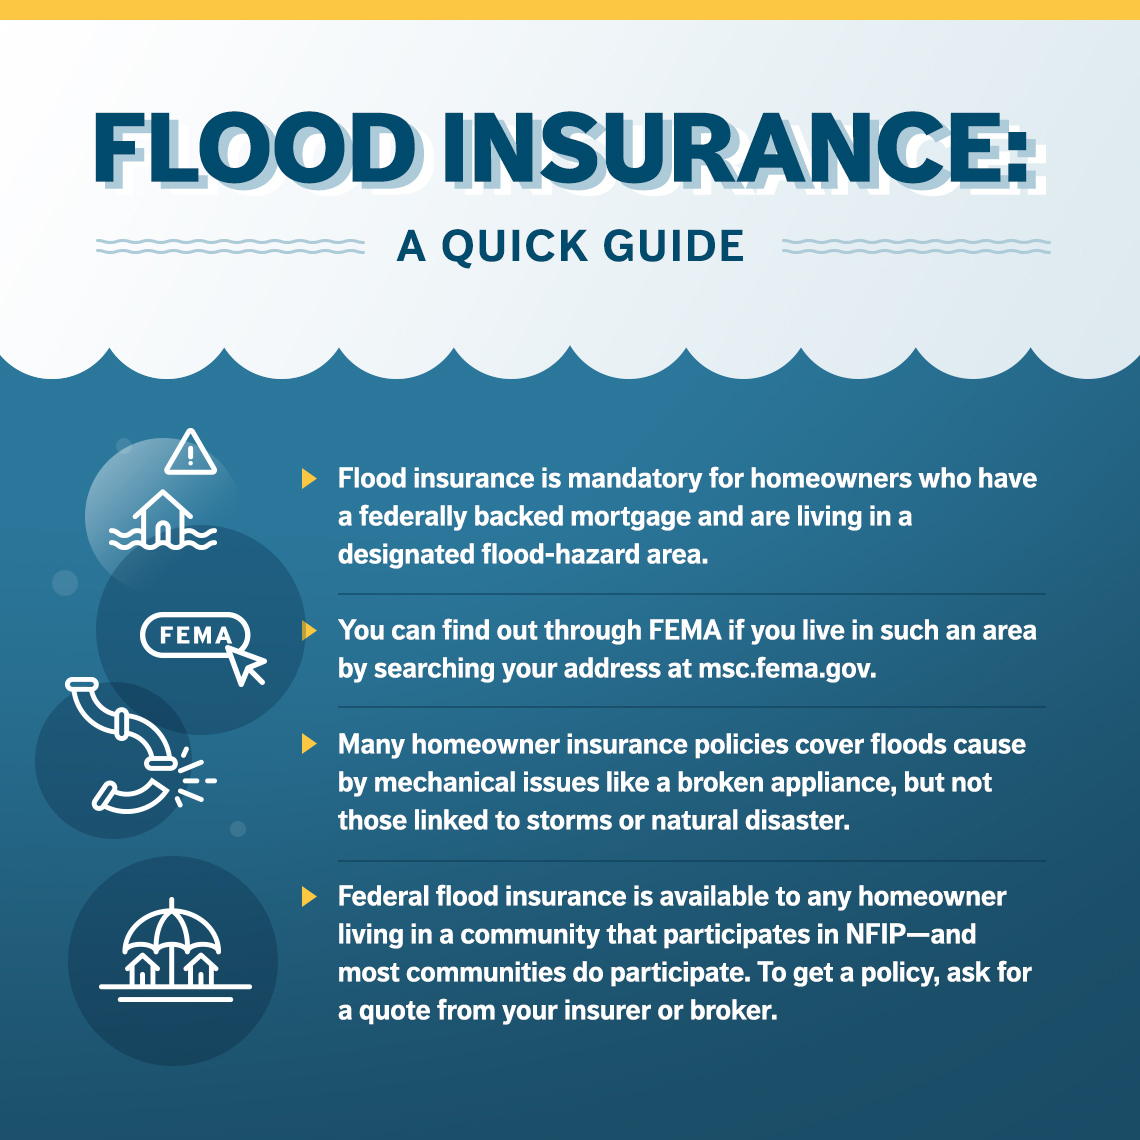 Flood Insurance facts